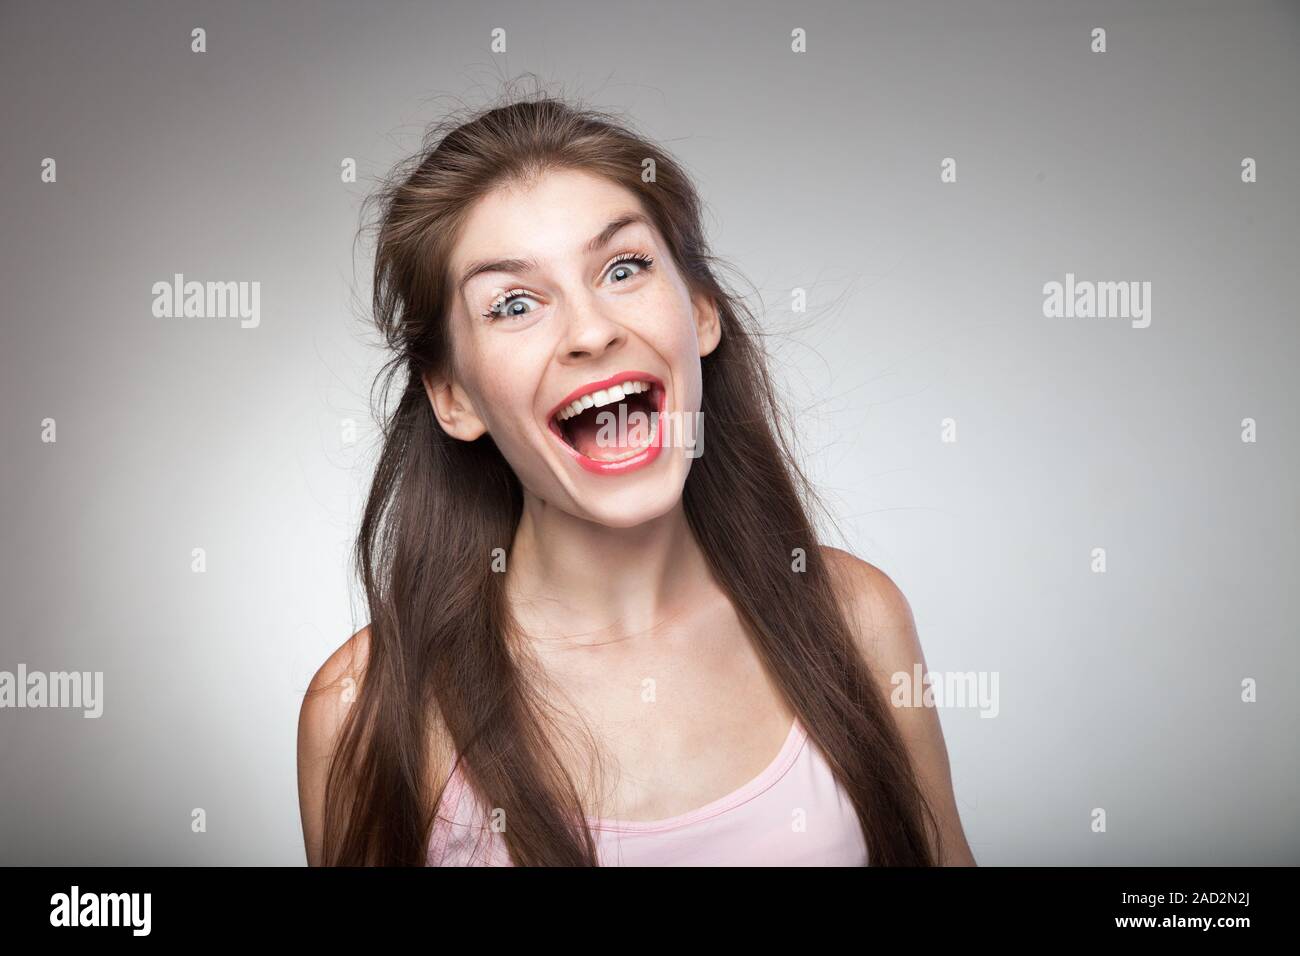 Crazy girl screaming loud. Stock Photo